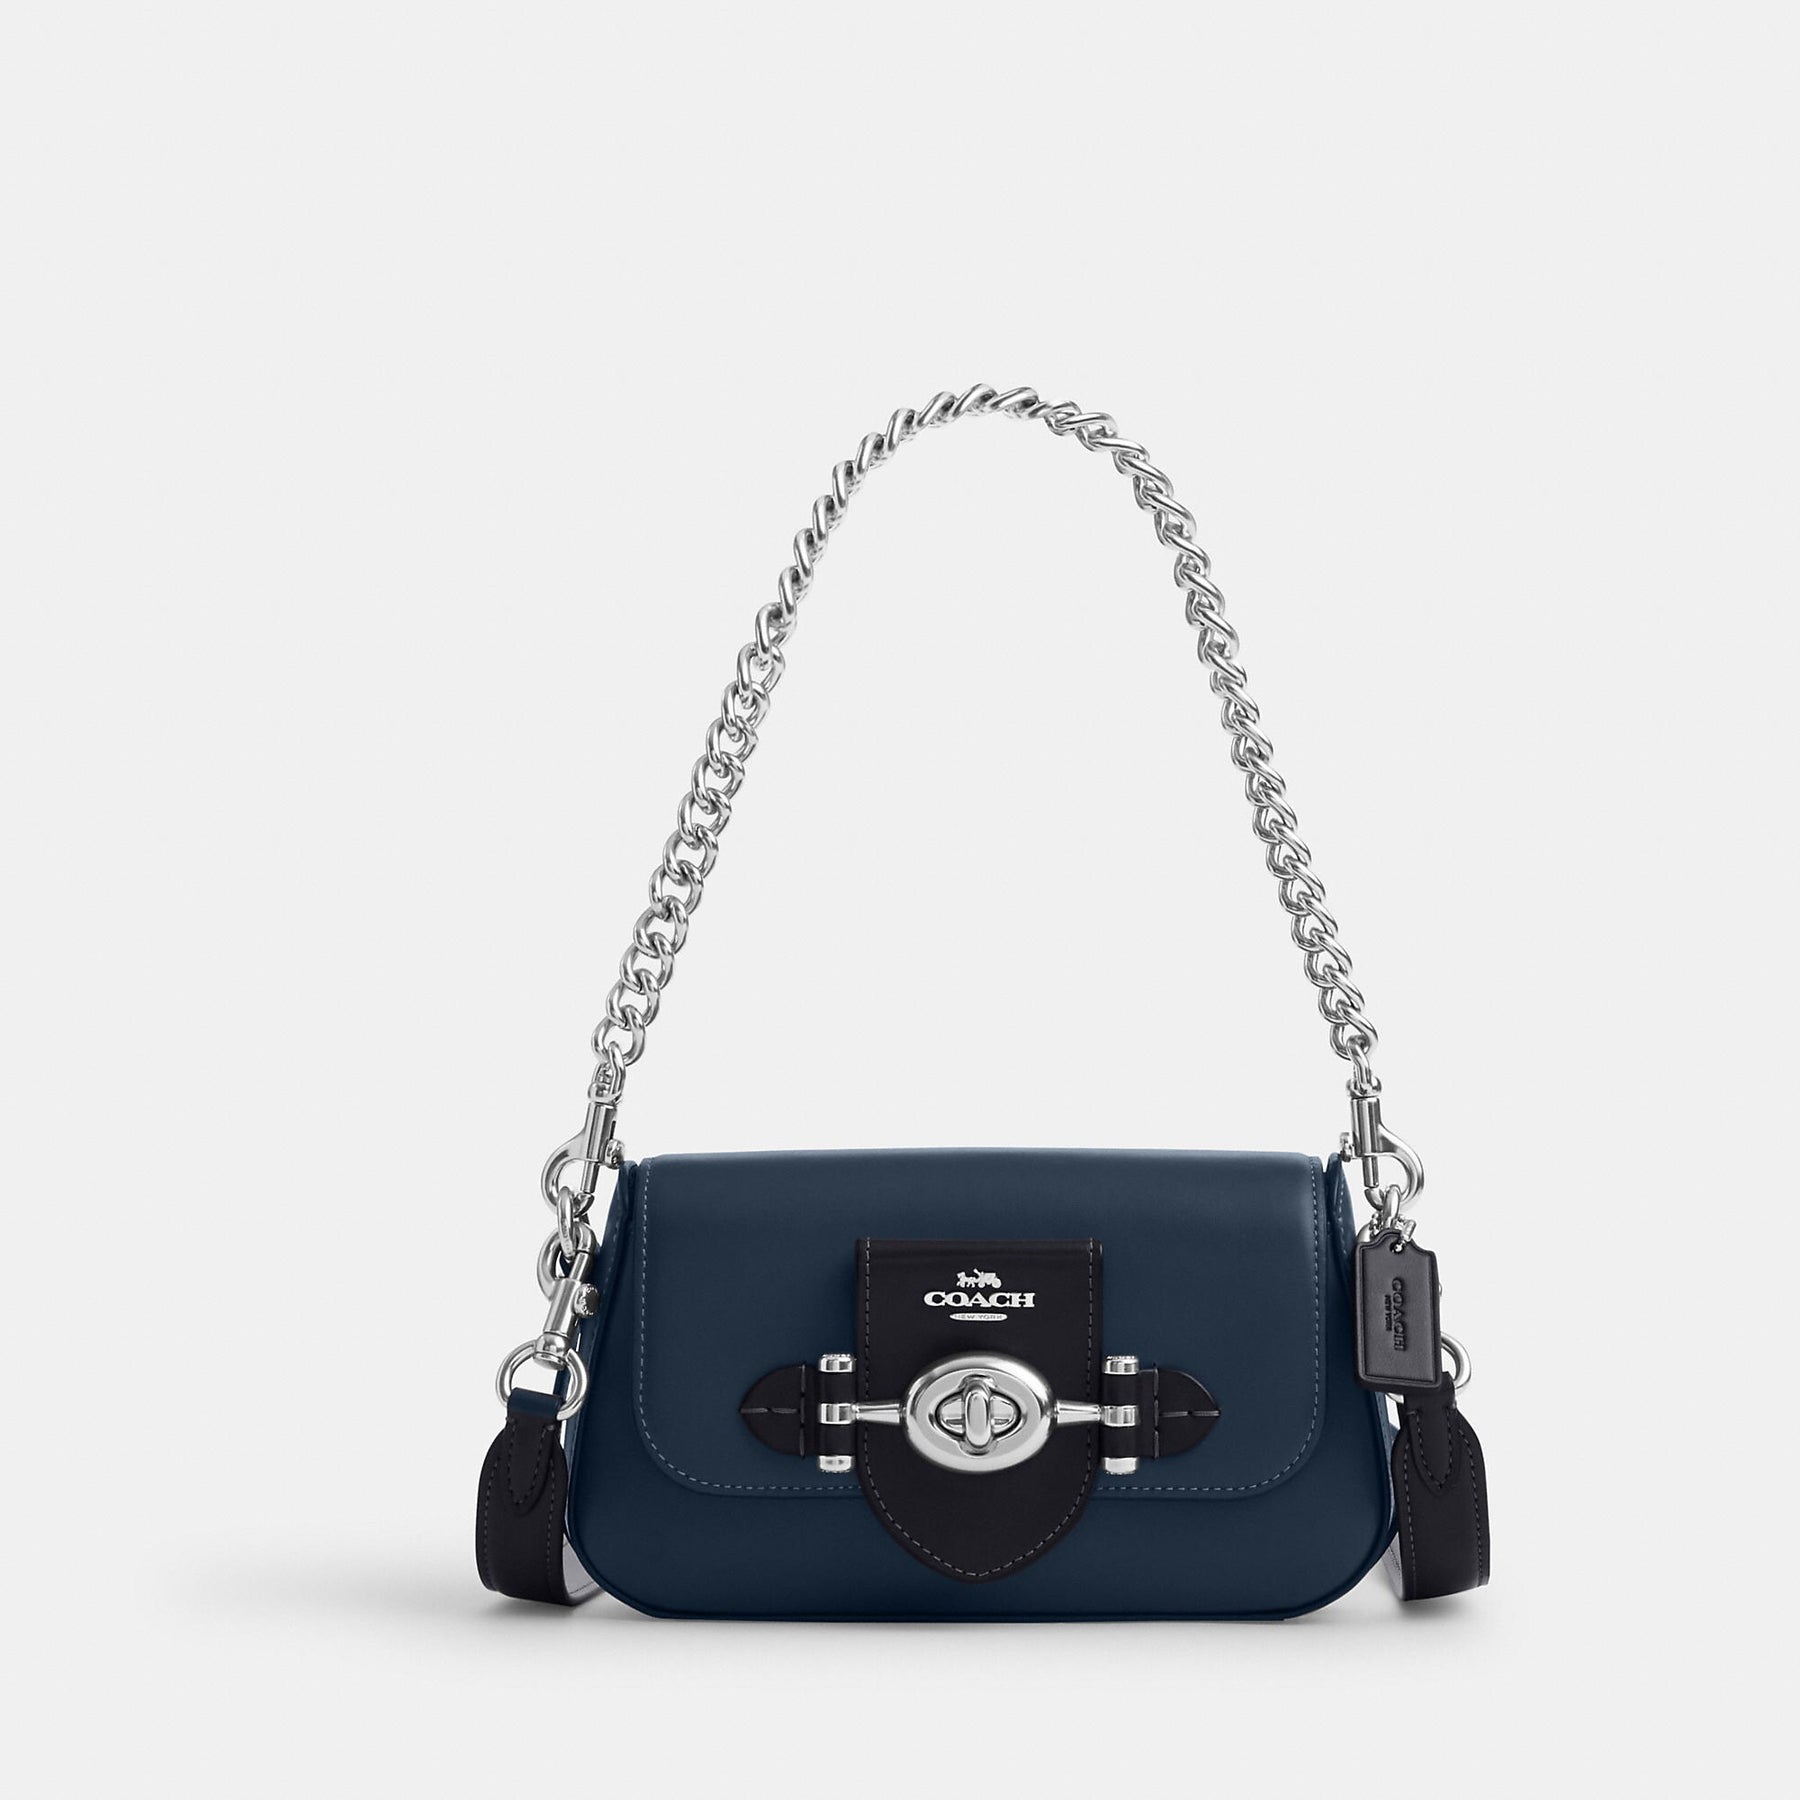 COACH Washed Denim Signature Kira Crossbody (Pale Blue) Handbags